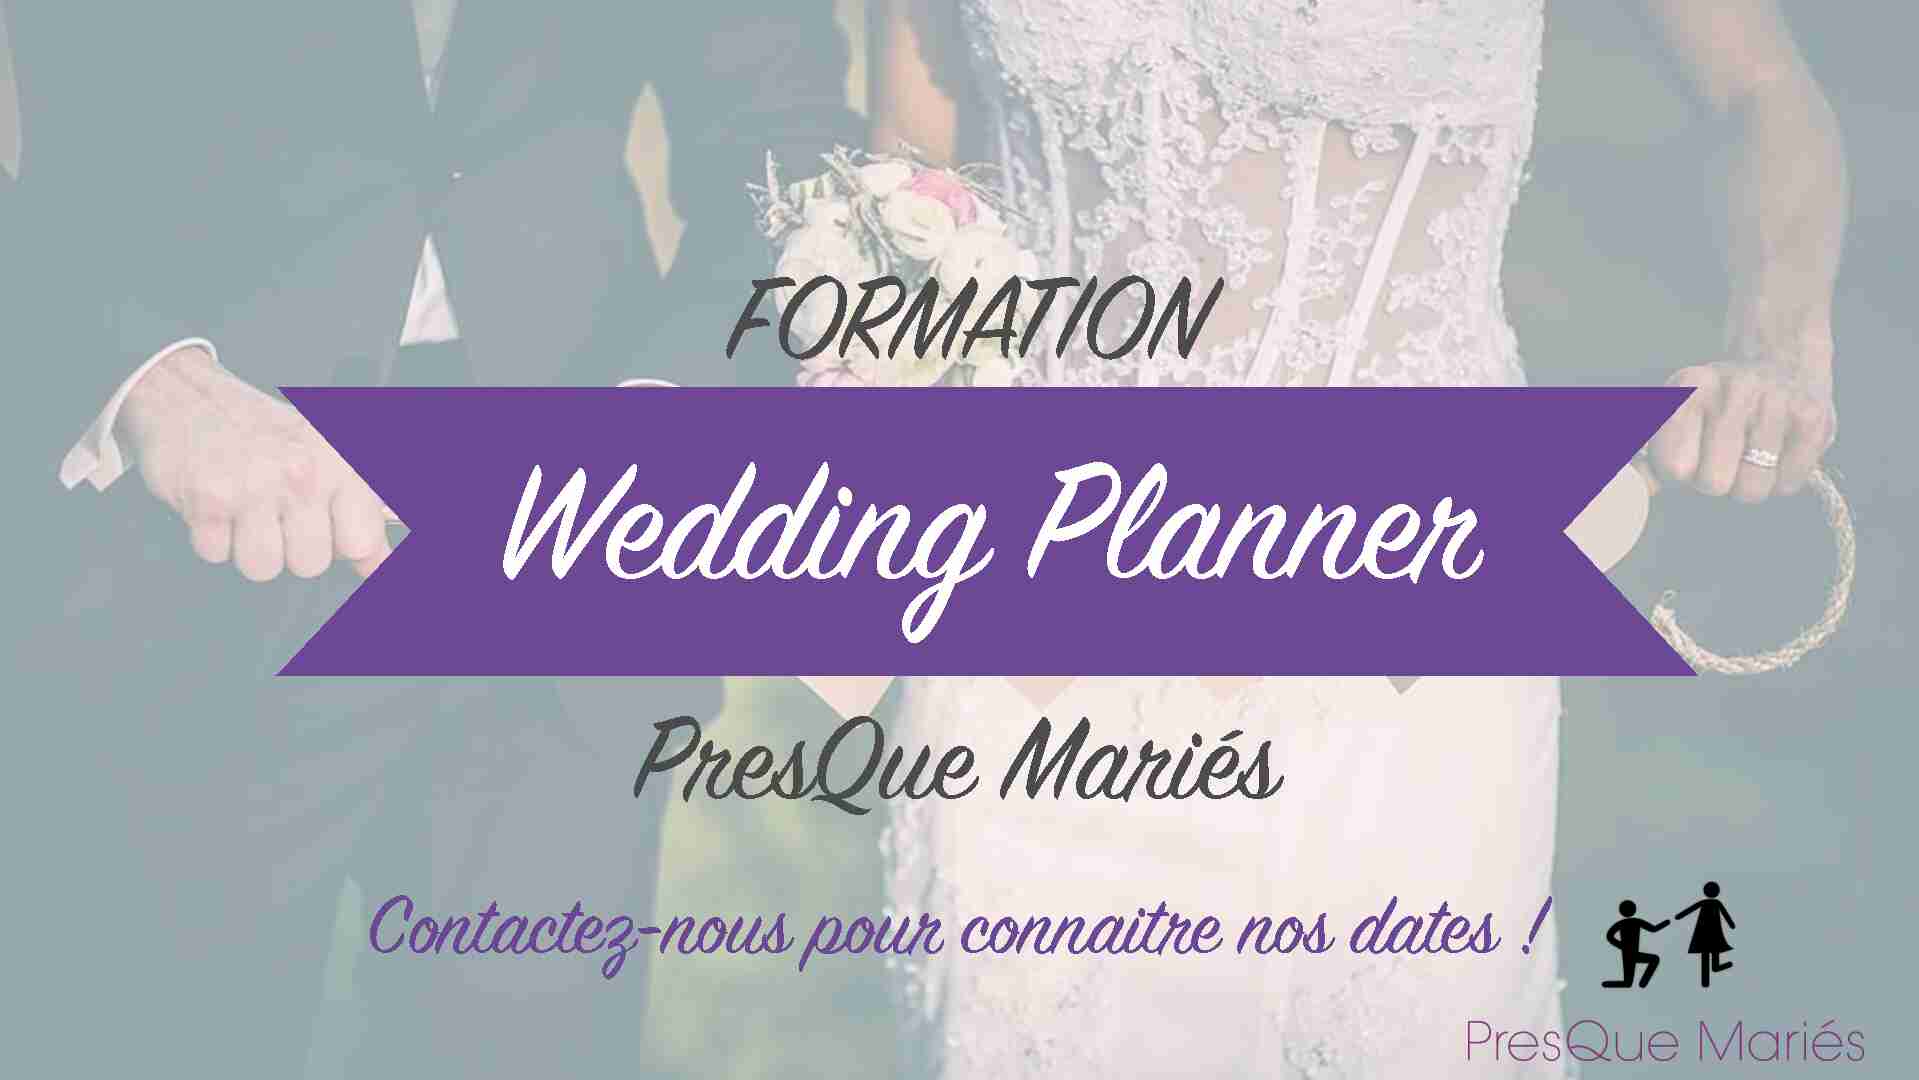 Brochure de formation 2015-2016 - Jorganise mon mariage